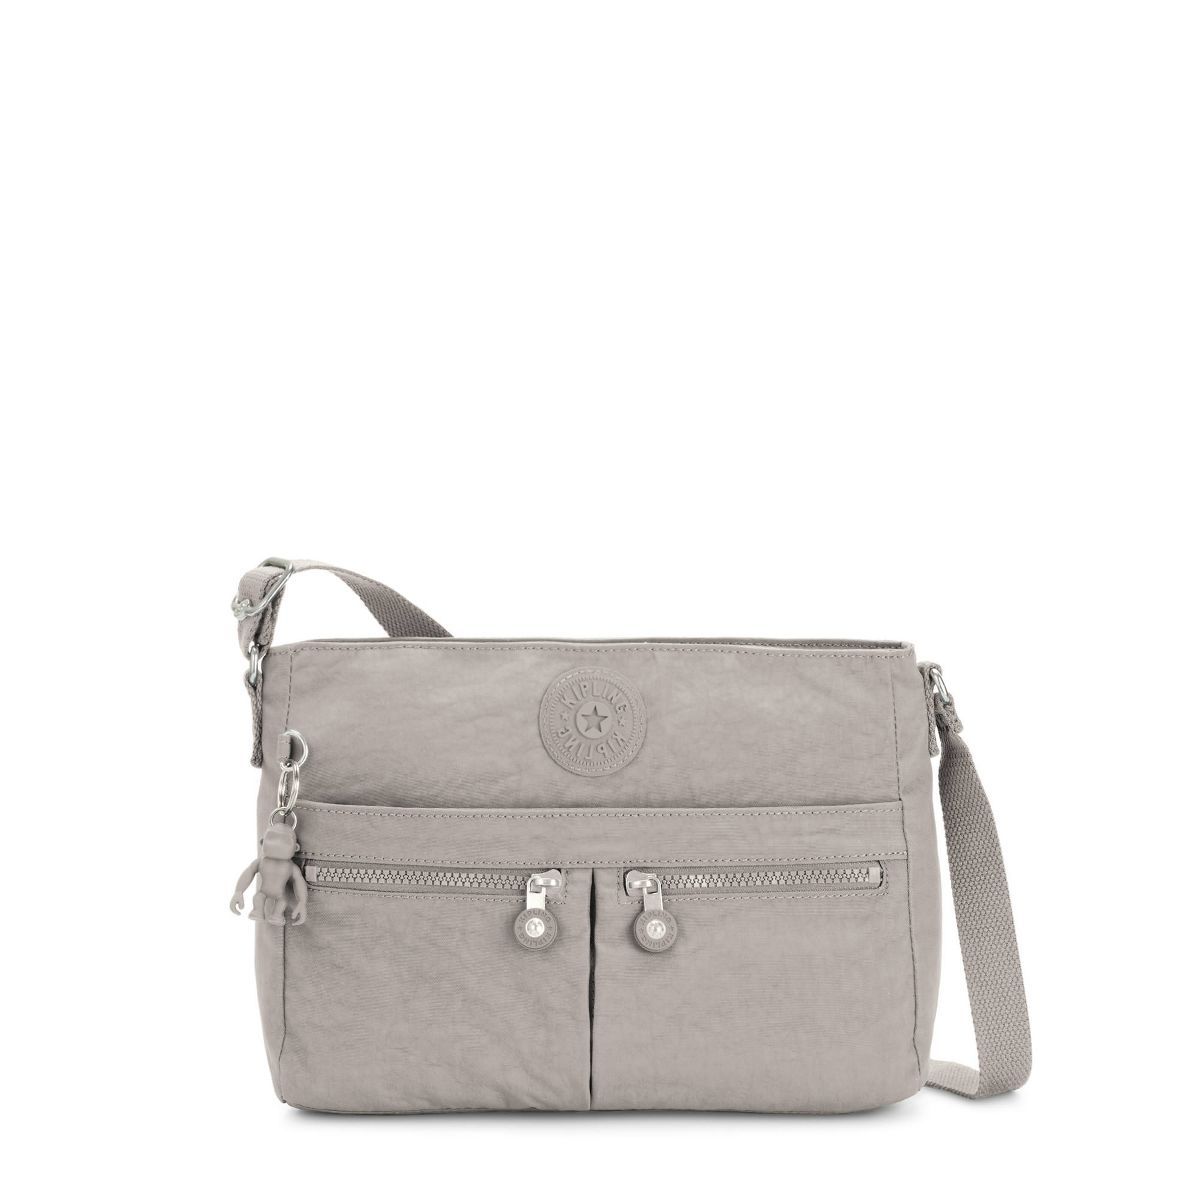 Kipling New Angie Crossbody Bag | Target